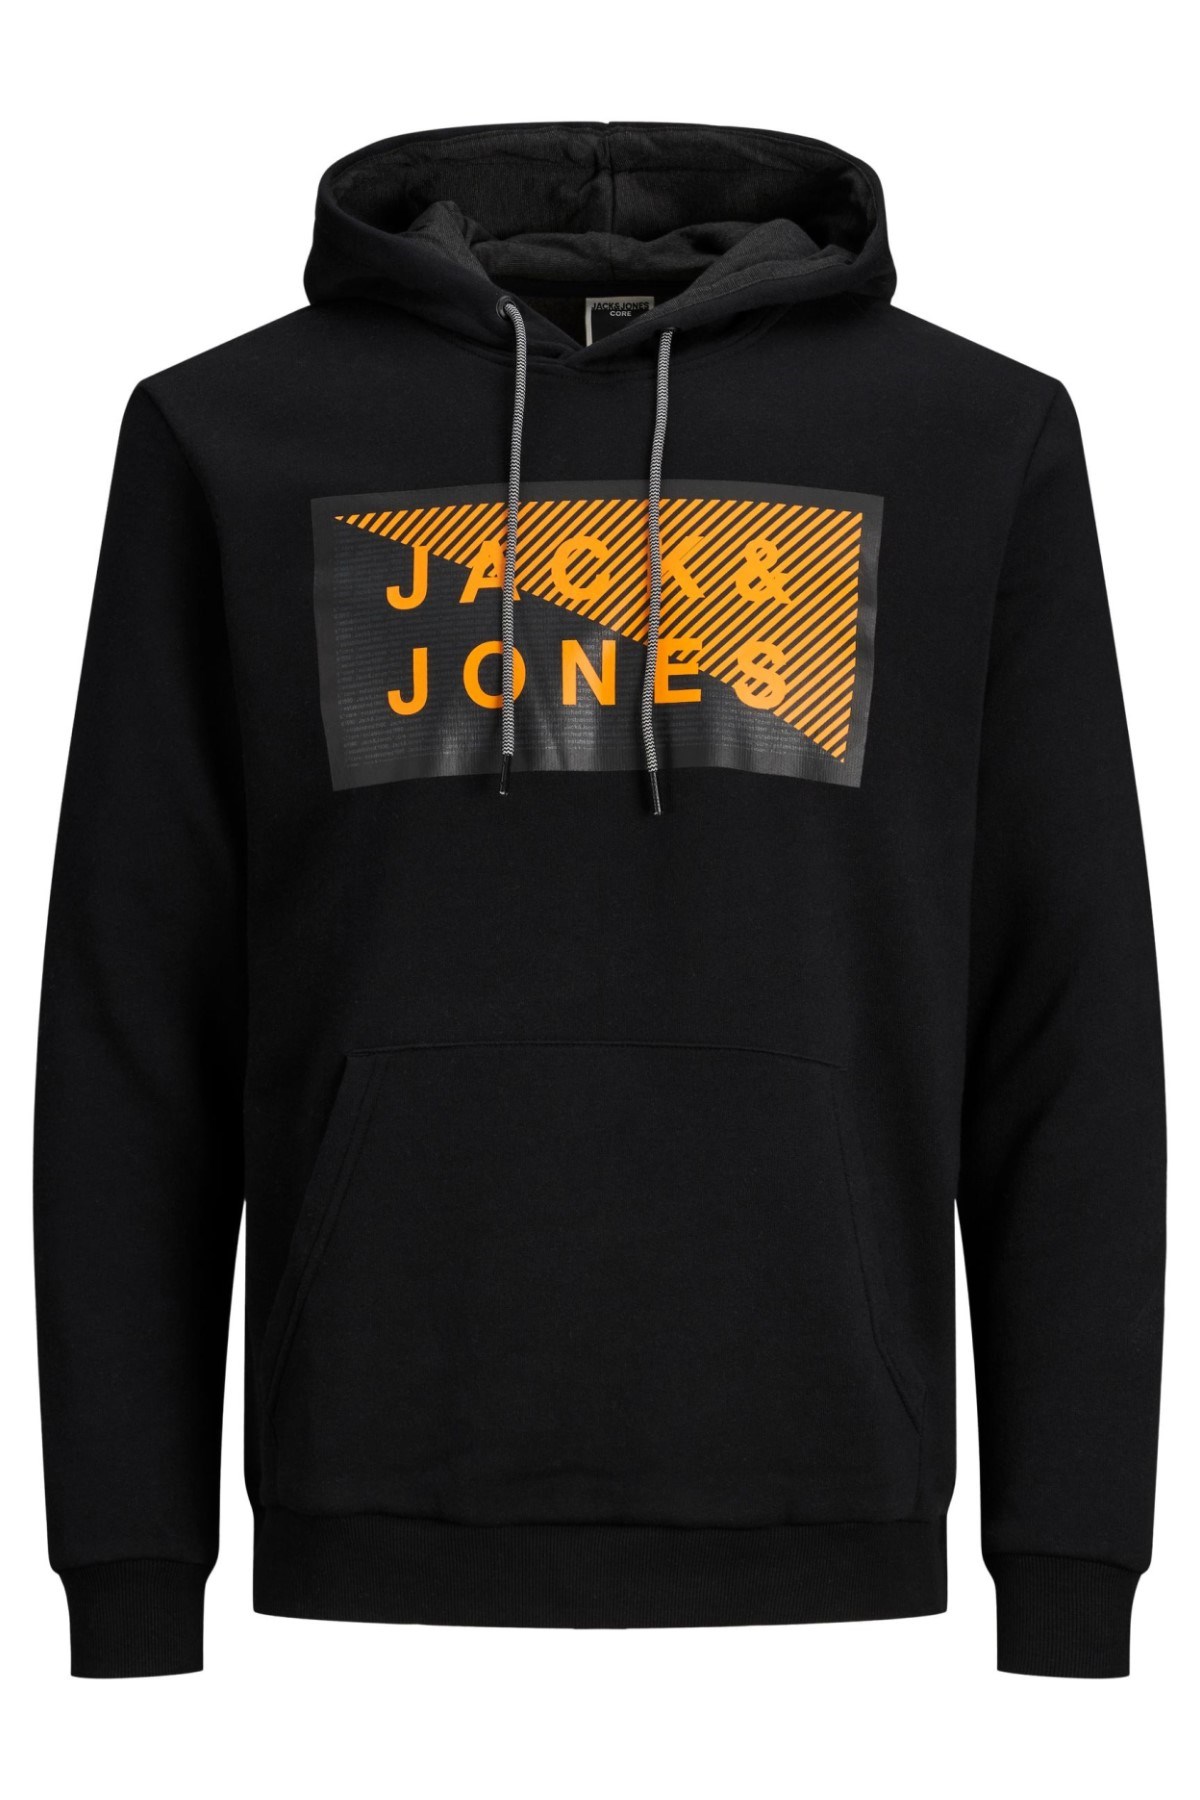 Jack Jones Erkek S-Shirt 12195903 Black